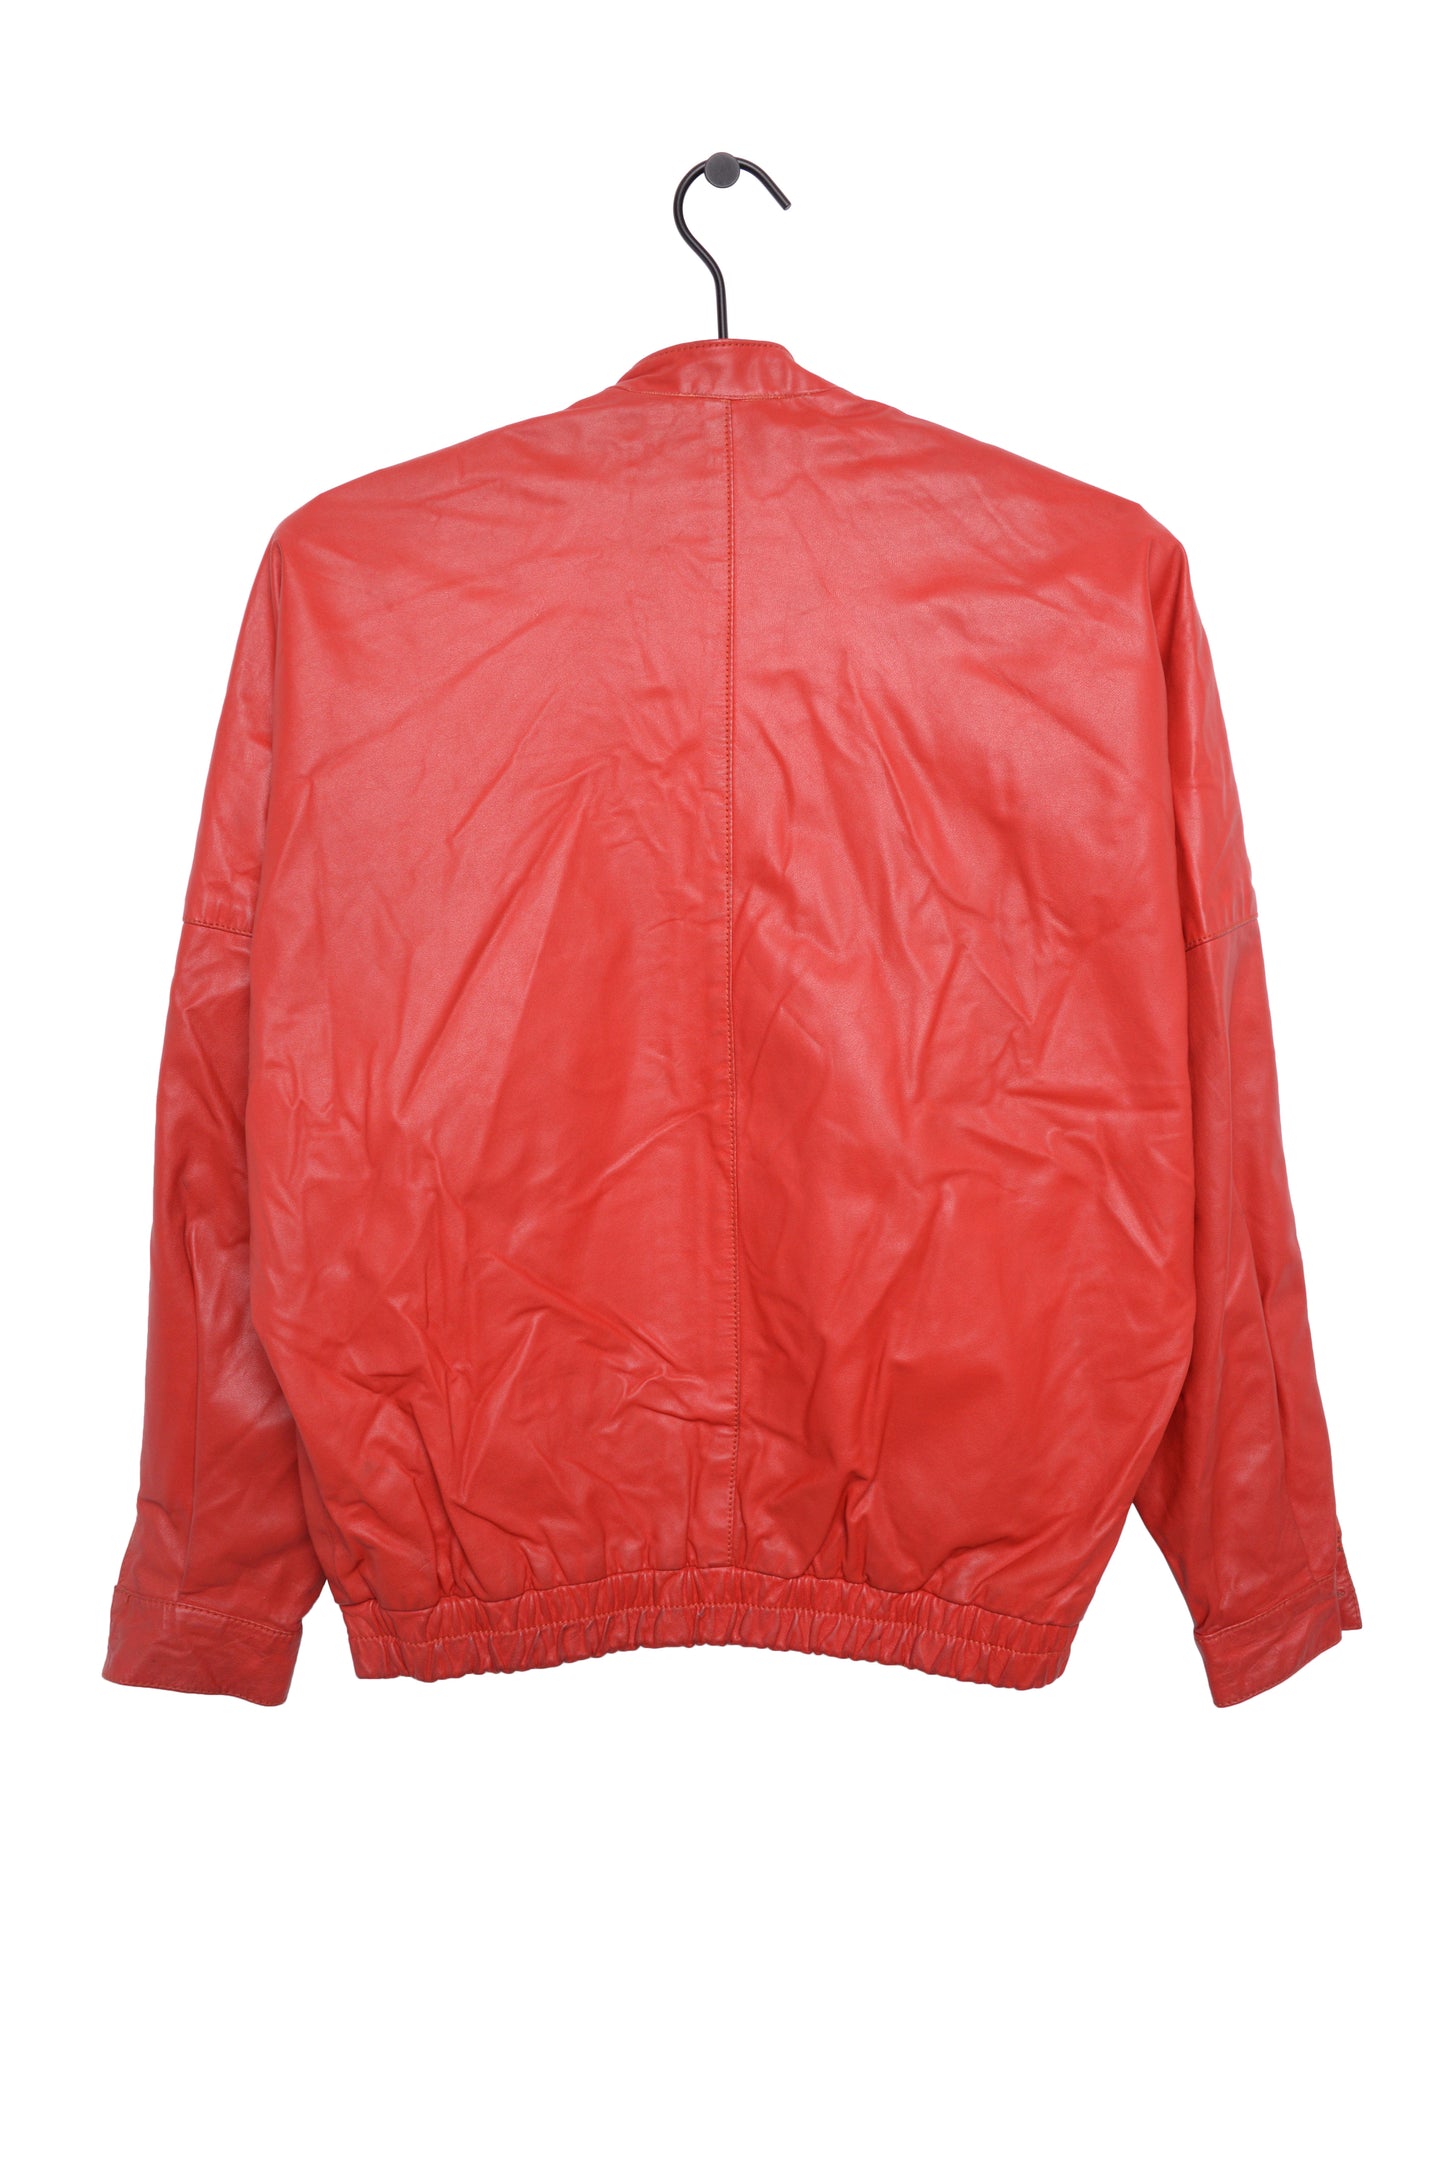 1980s Cherry Red Bomber Jacket